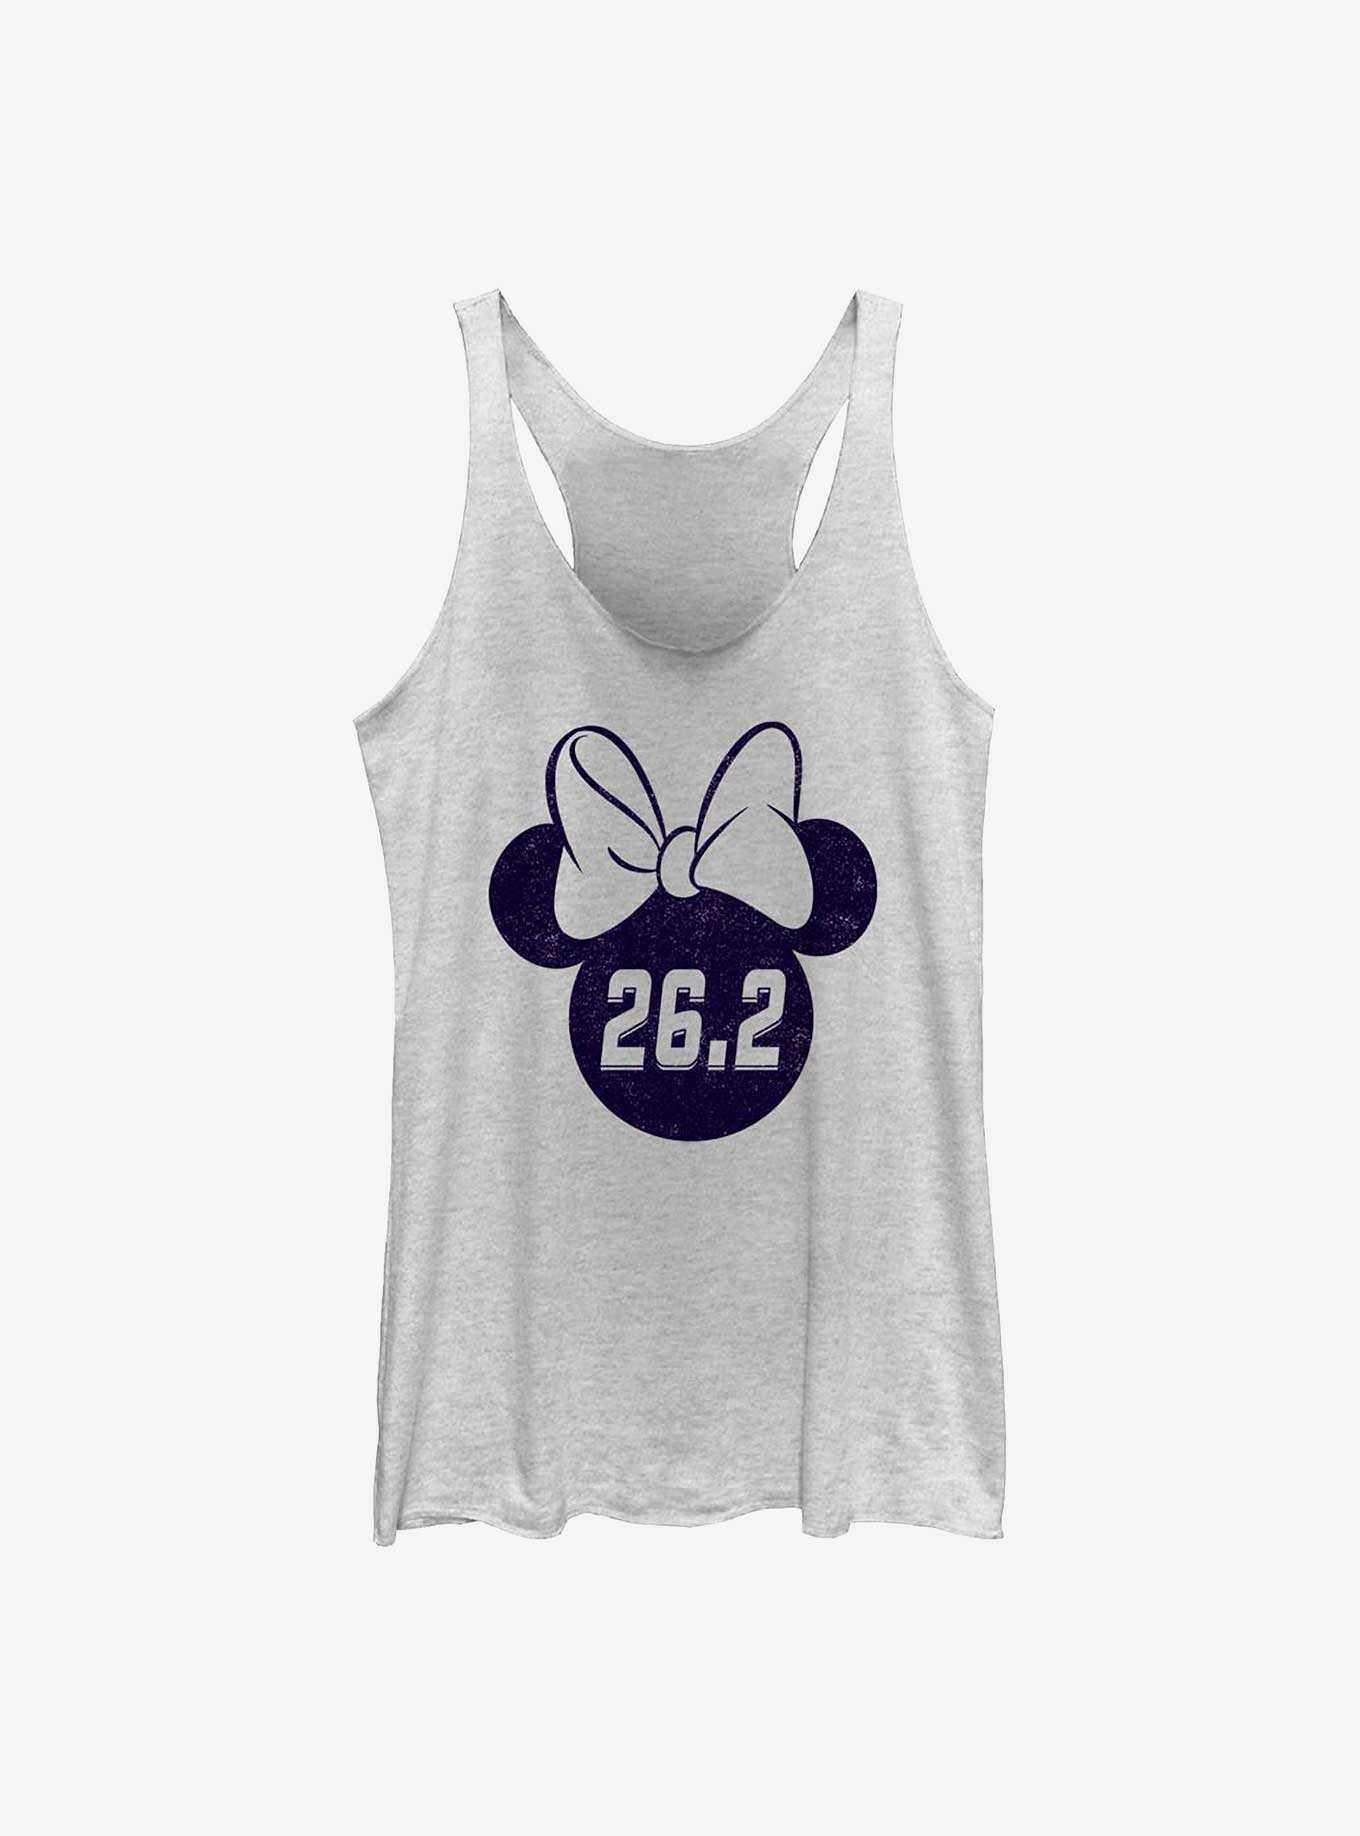 Disney Minnie Mouse 26.2 Marathon Ears Girls Tank, , hi-res